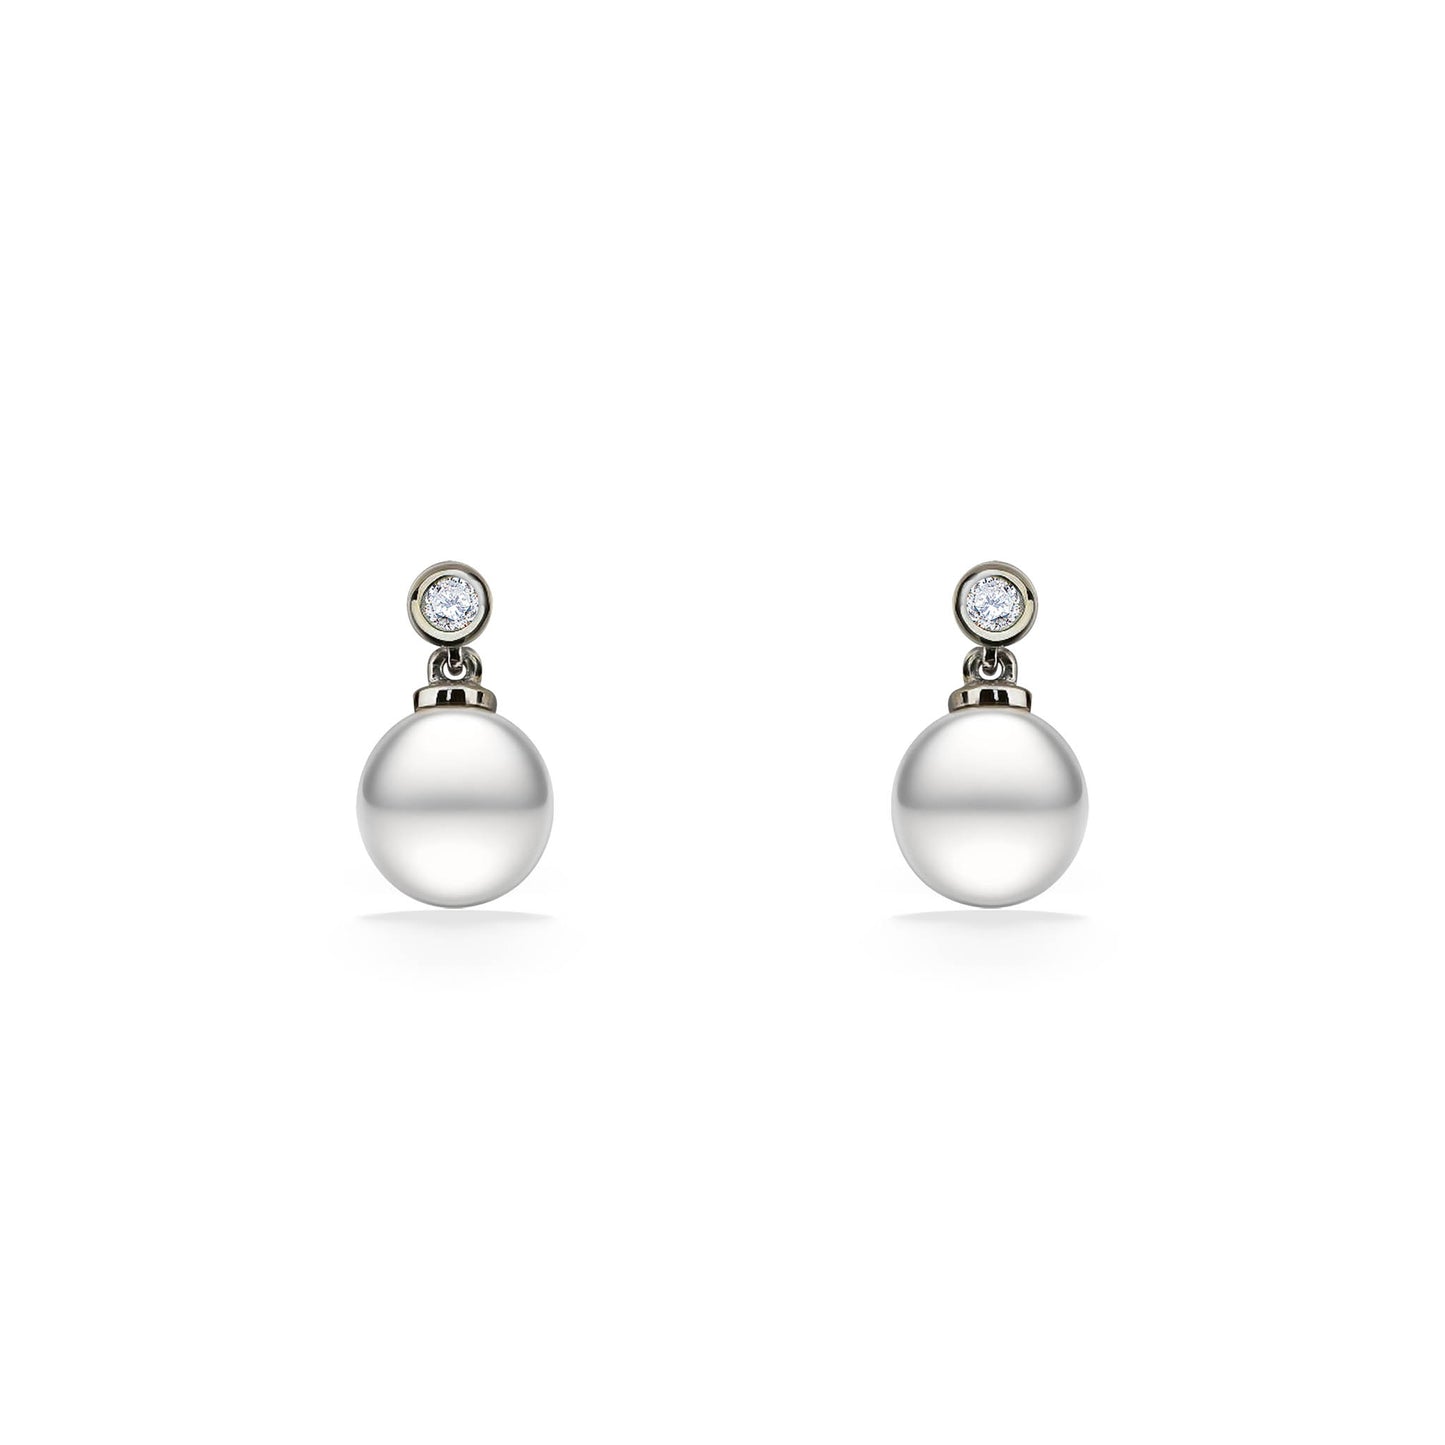 44537 - Sterling Silver - White Freshwater Pearl Drop Earrings